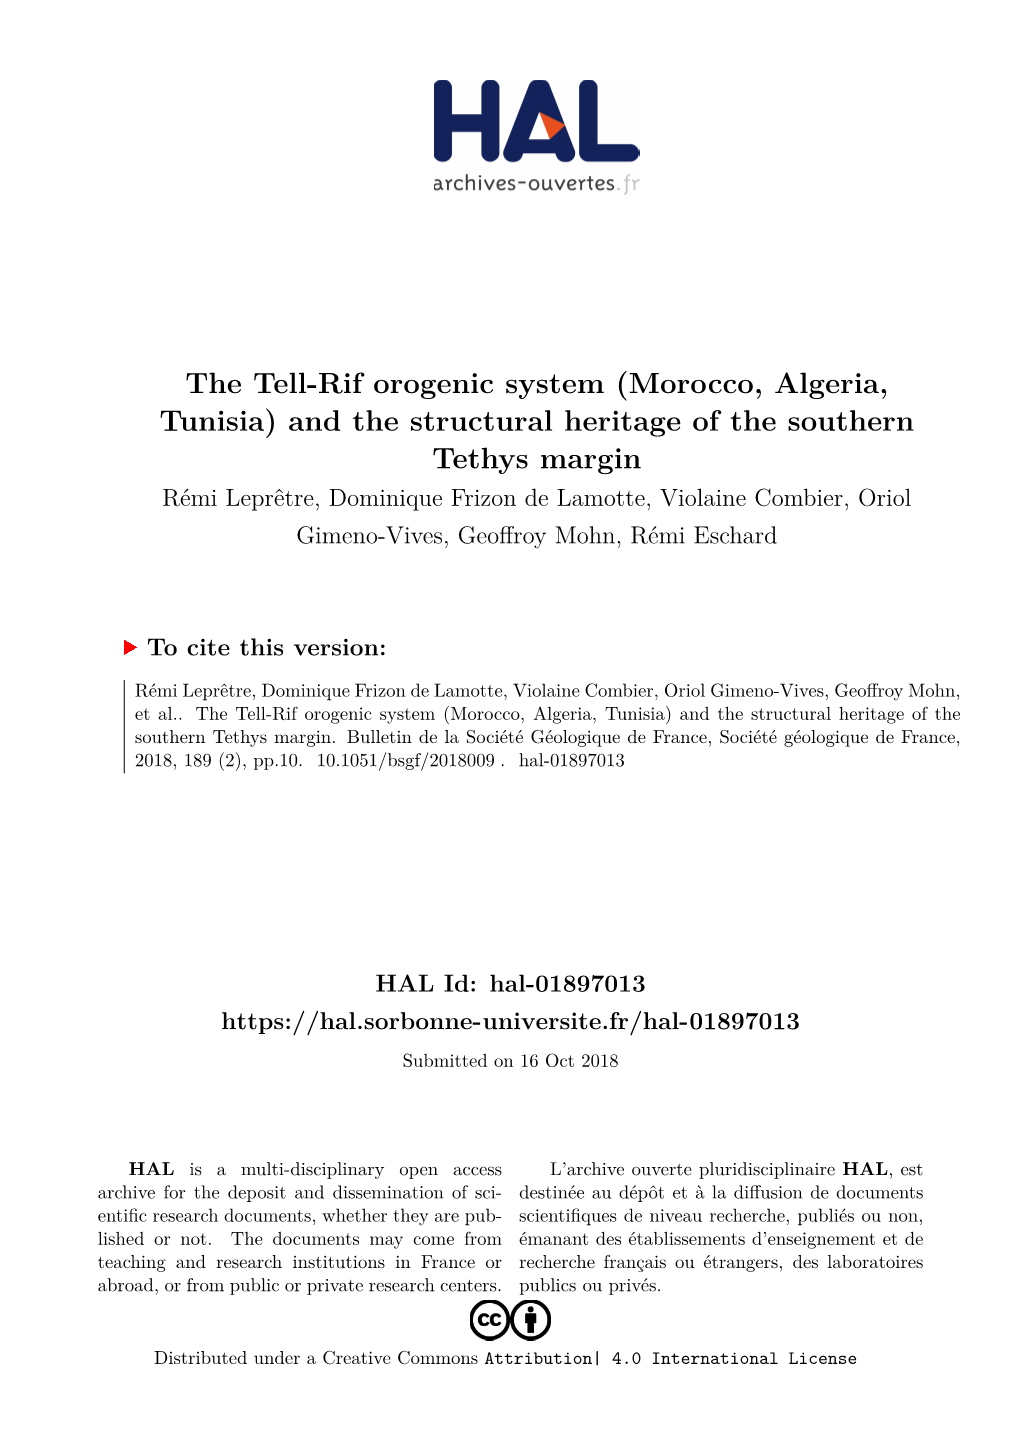 The Tell-Rif Orogenic System (Morocco, Algeria, Tunisia)